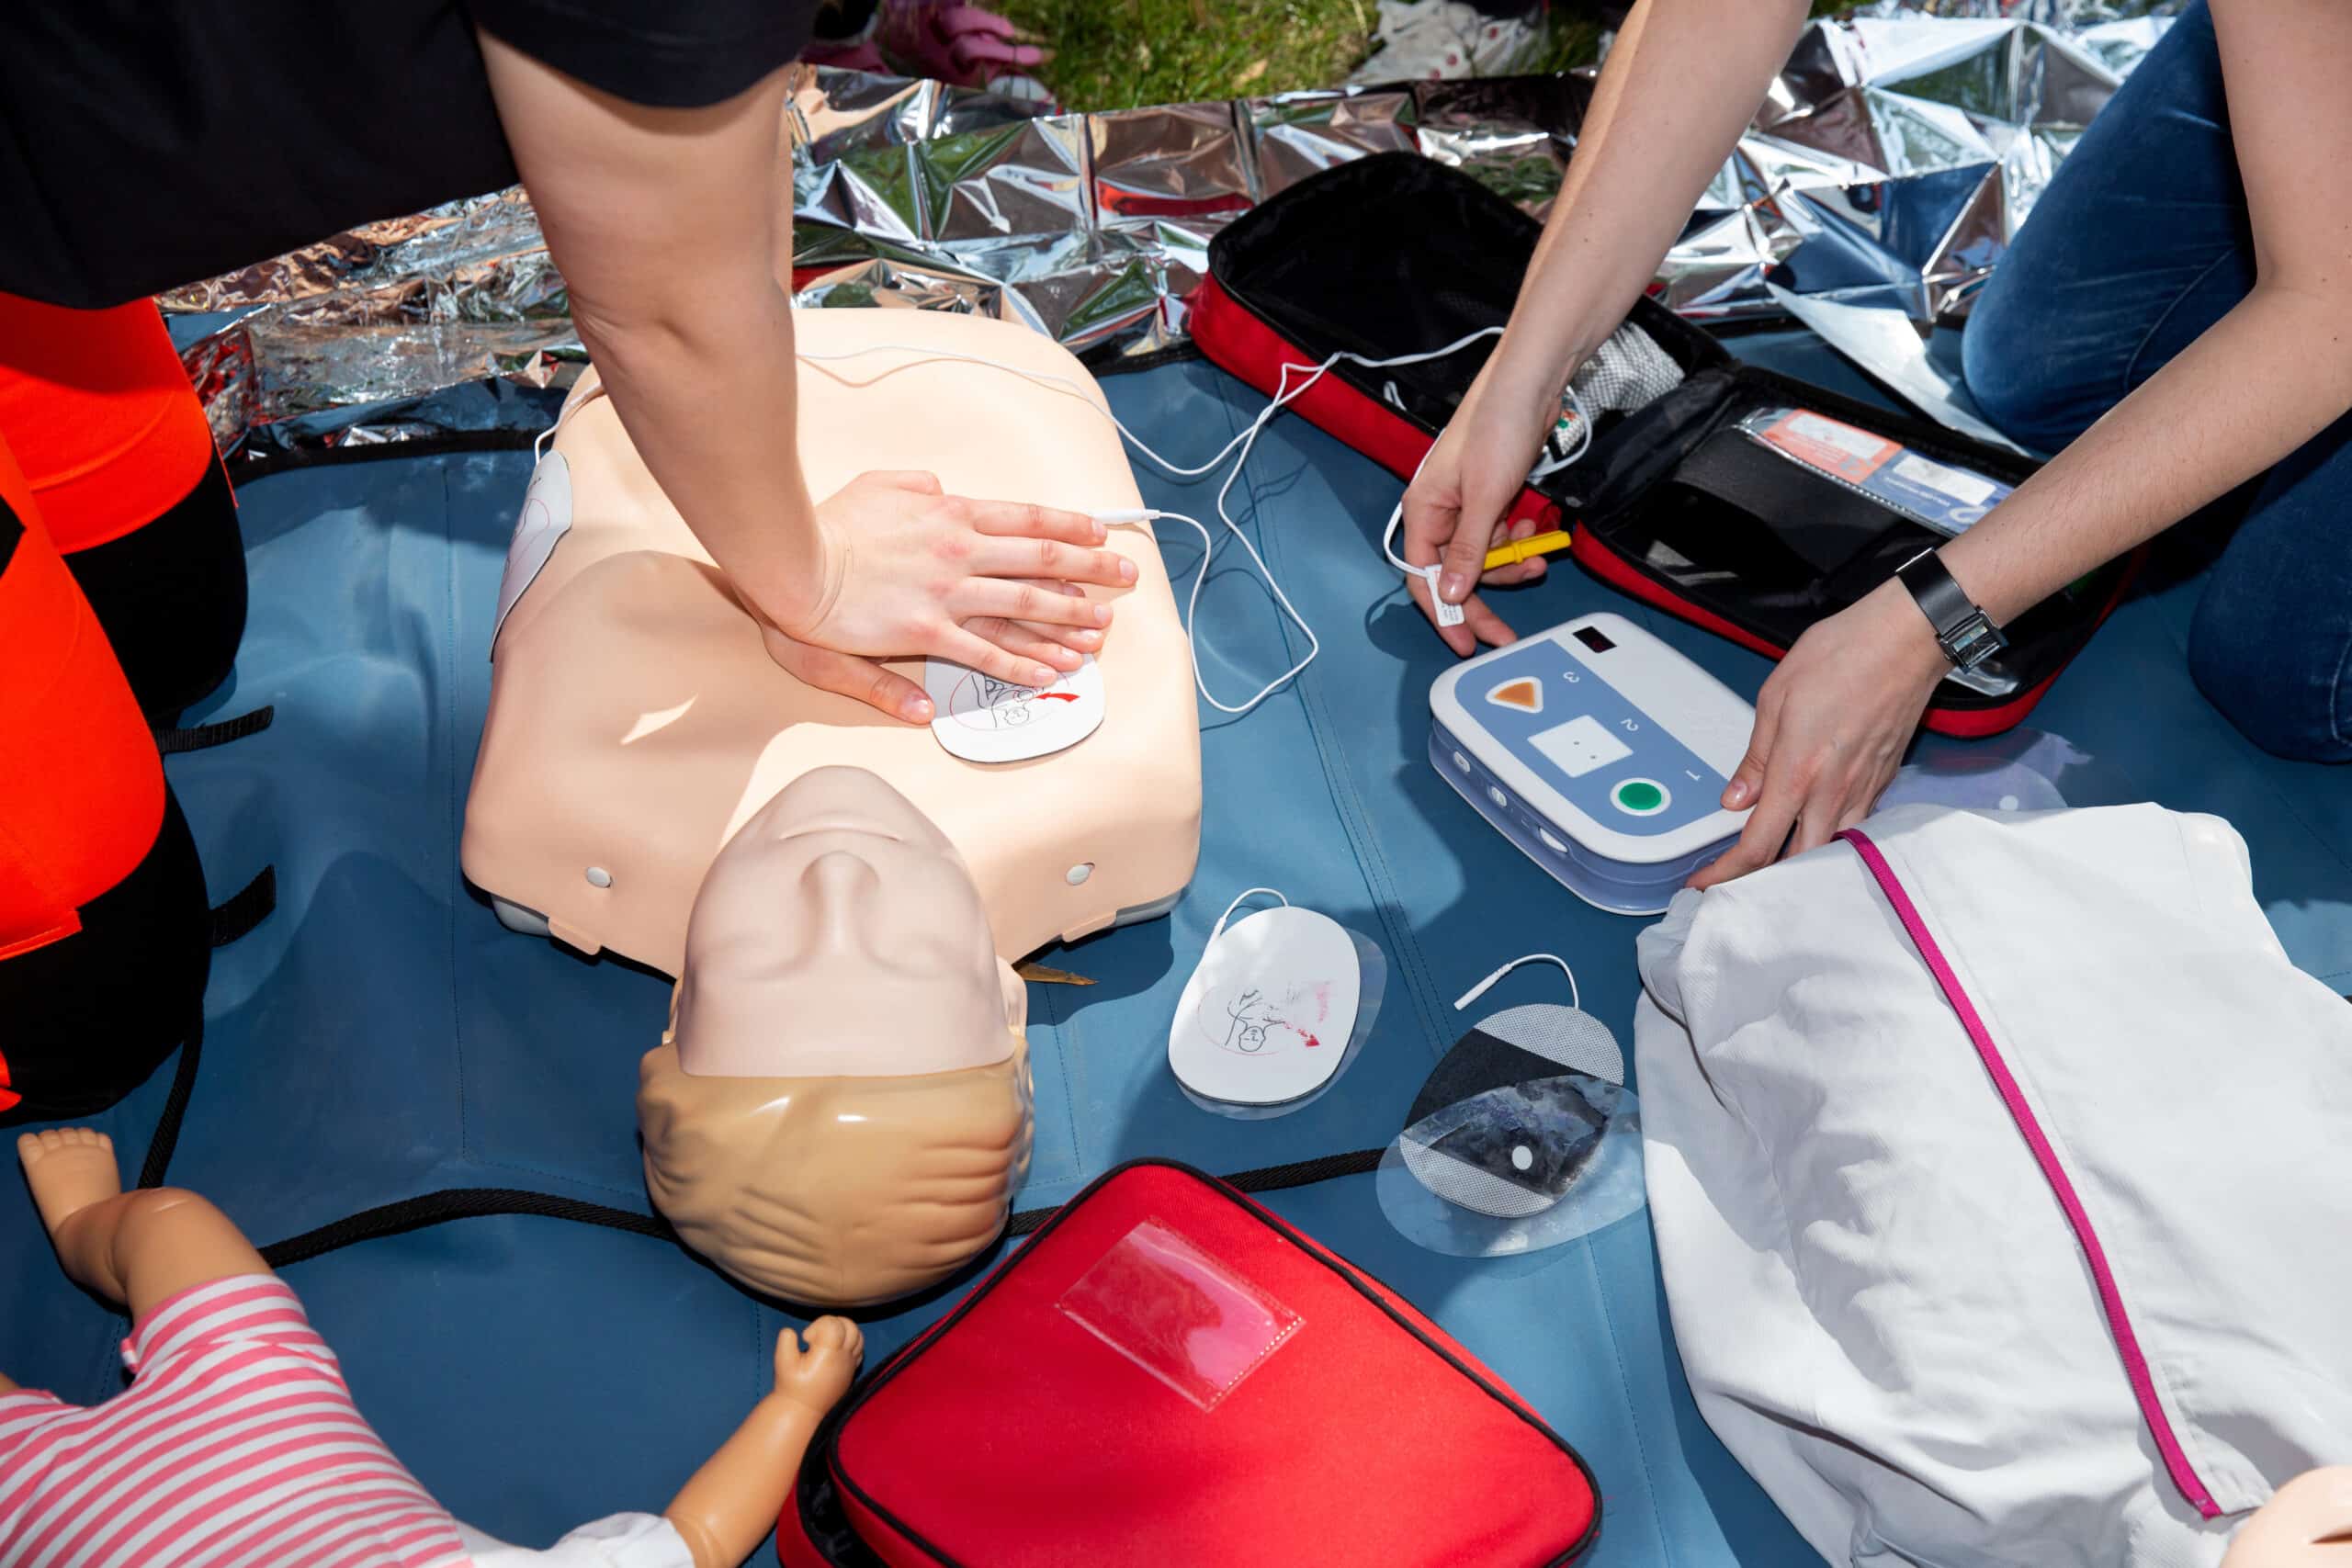 First aid training, resuscitation demonstration